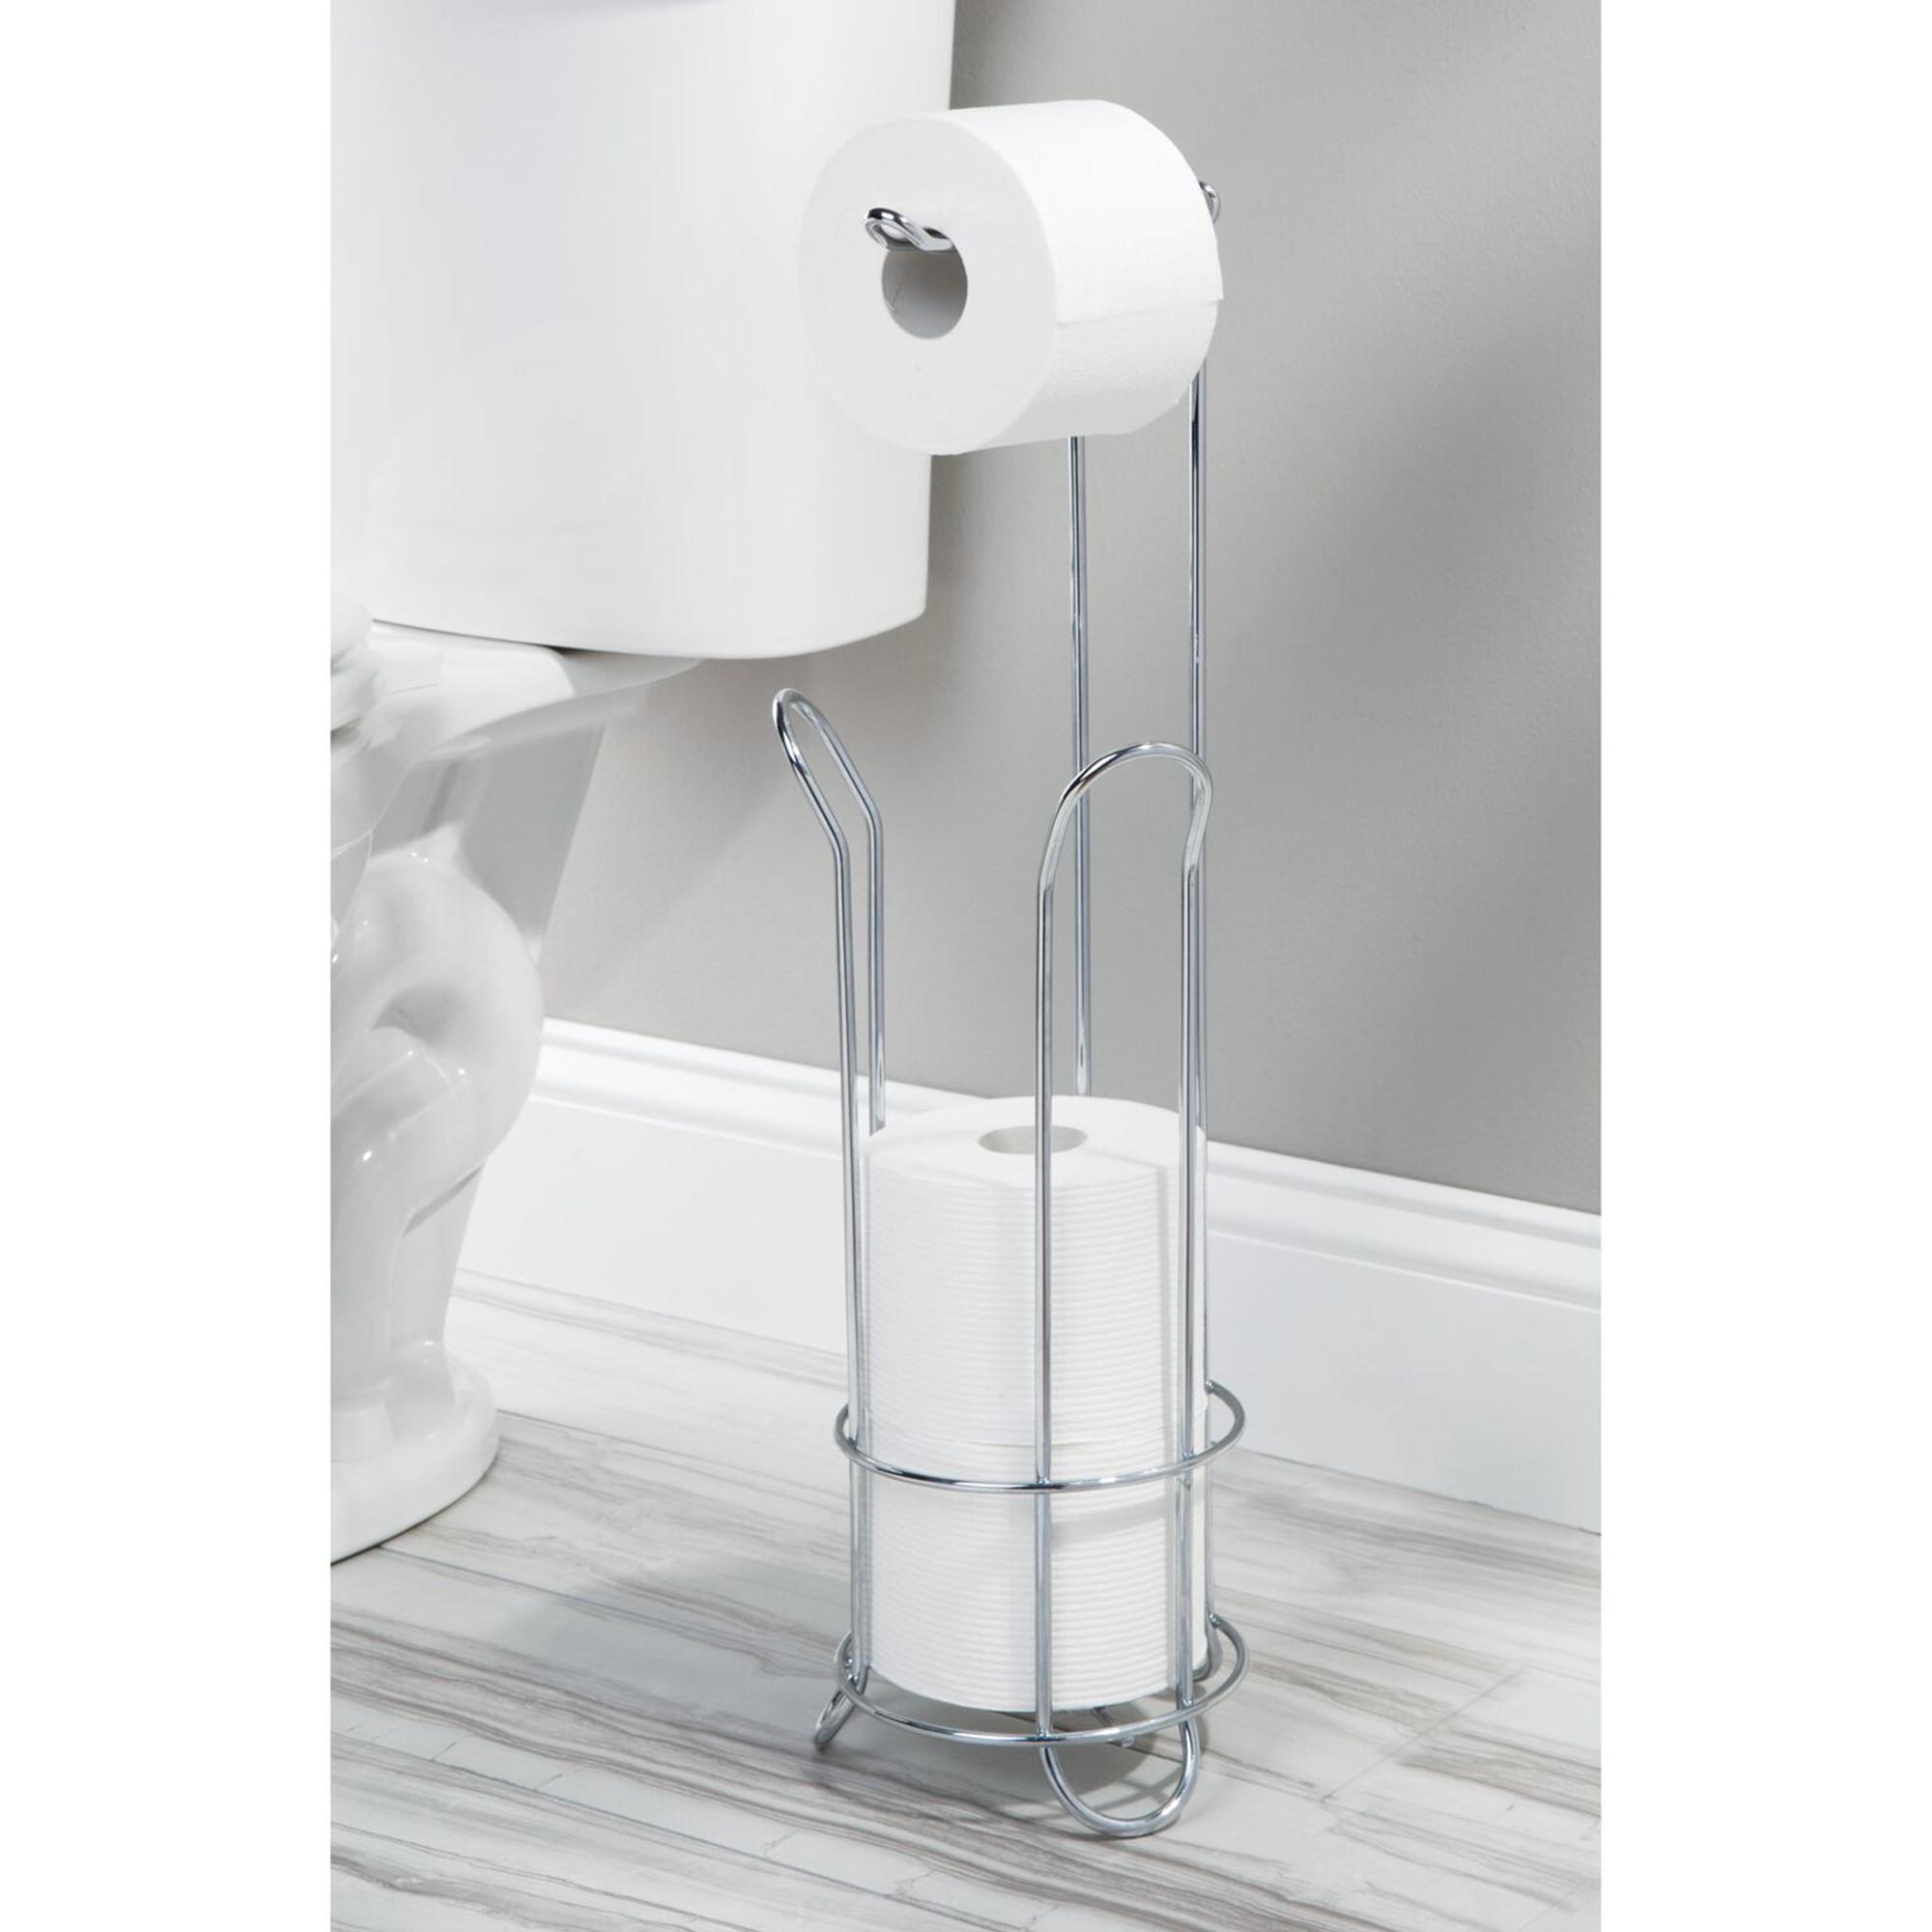 iDesign Classico Toilet Paper Holder Silver Image 5